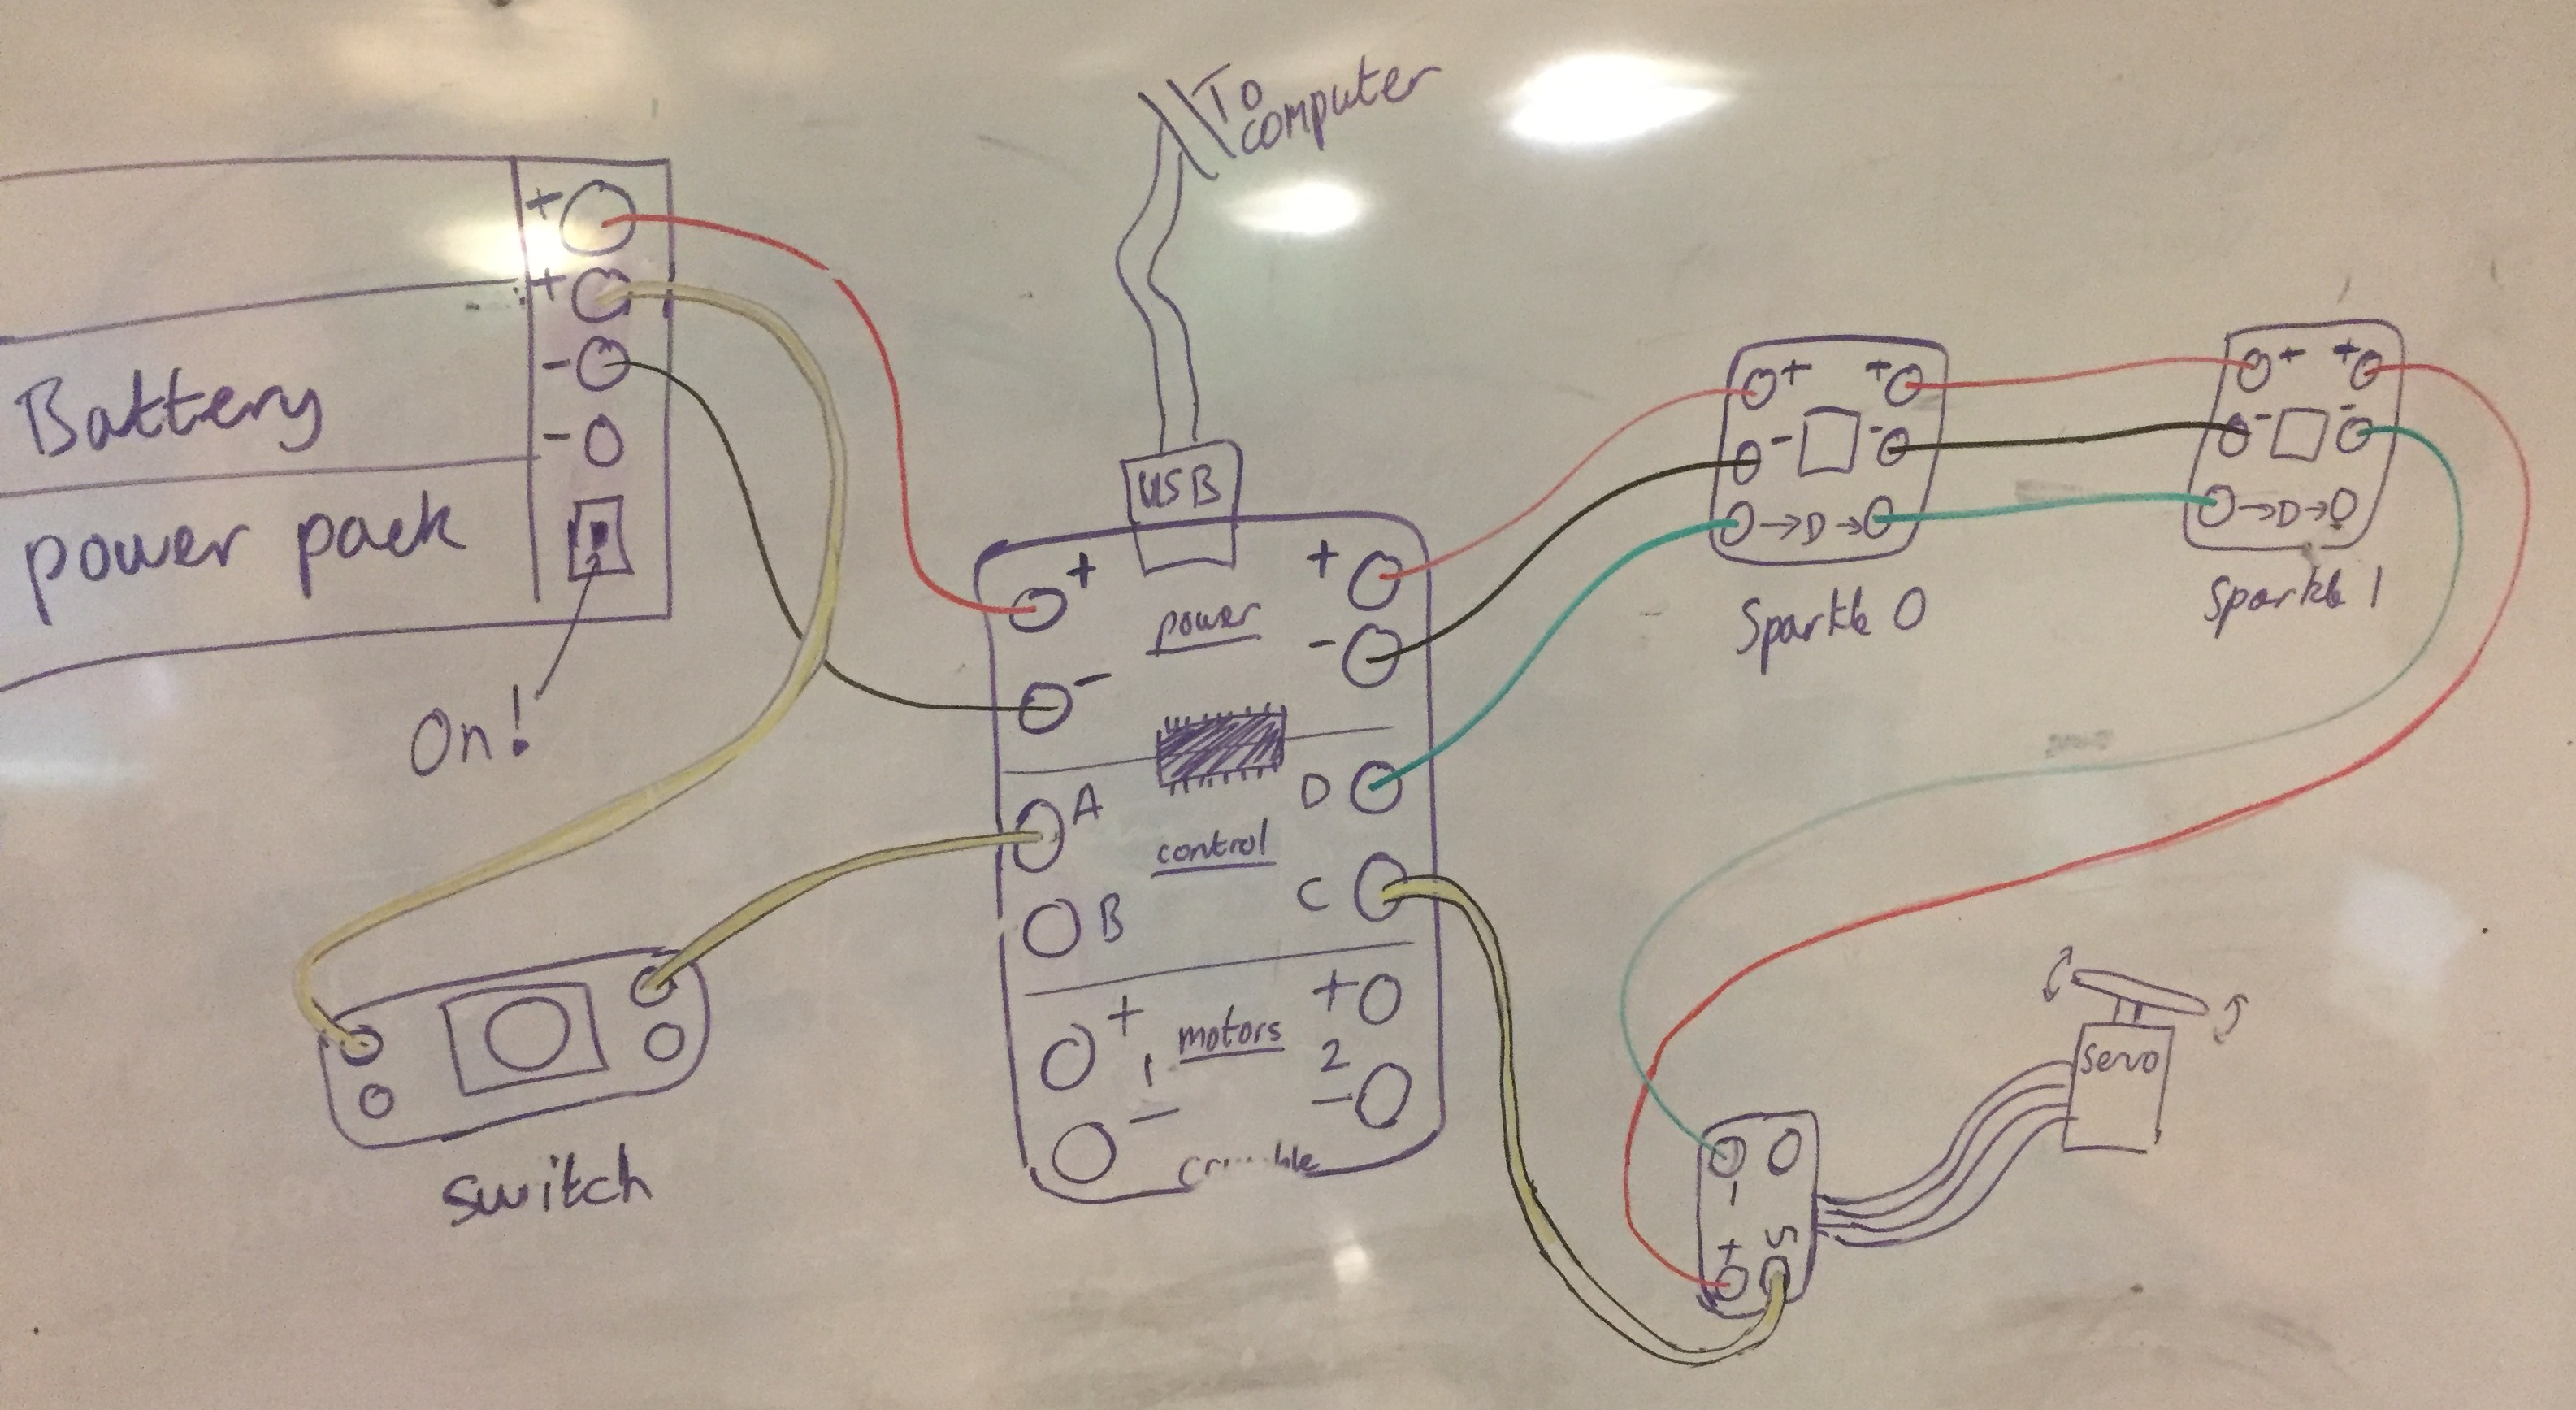 Primary Computing crumble wiring diagram